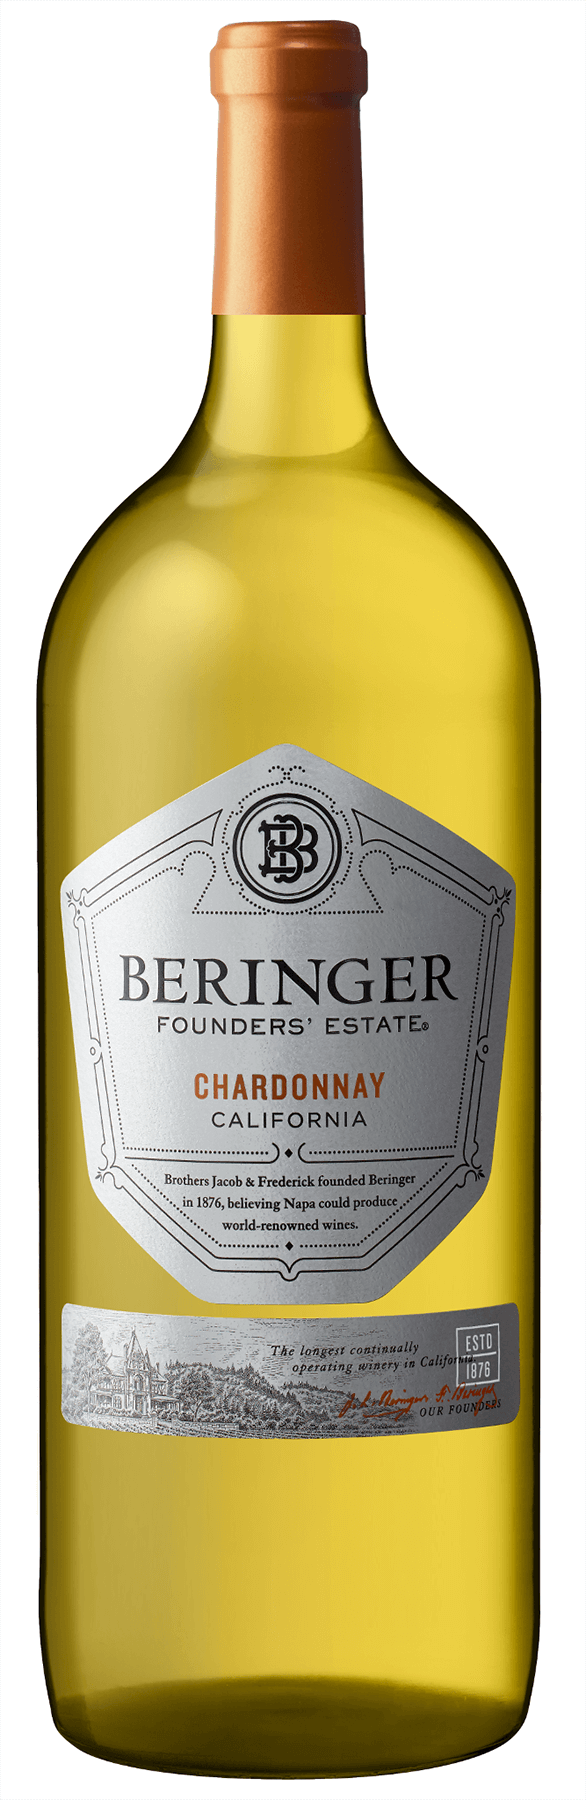 Beringer Founders' Estate Chardonnay